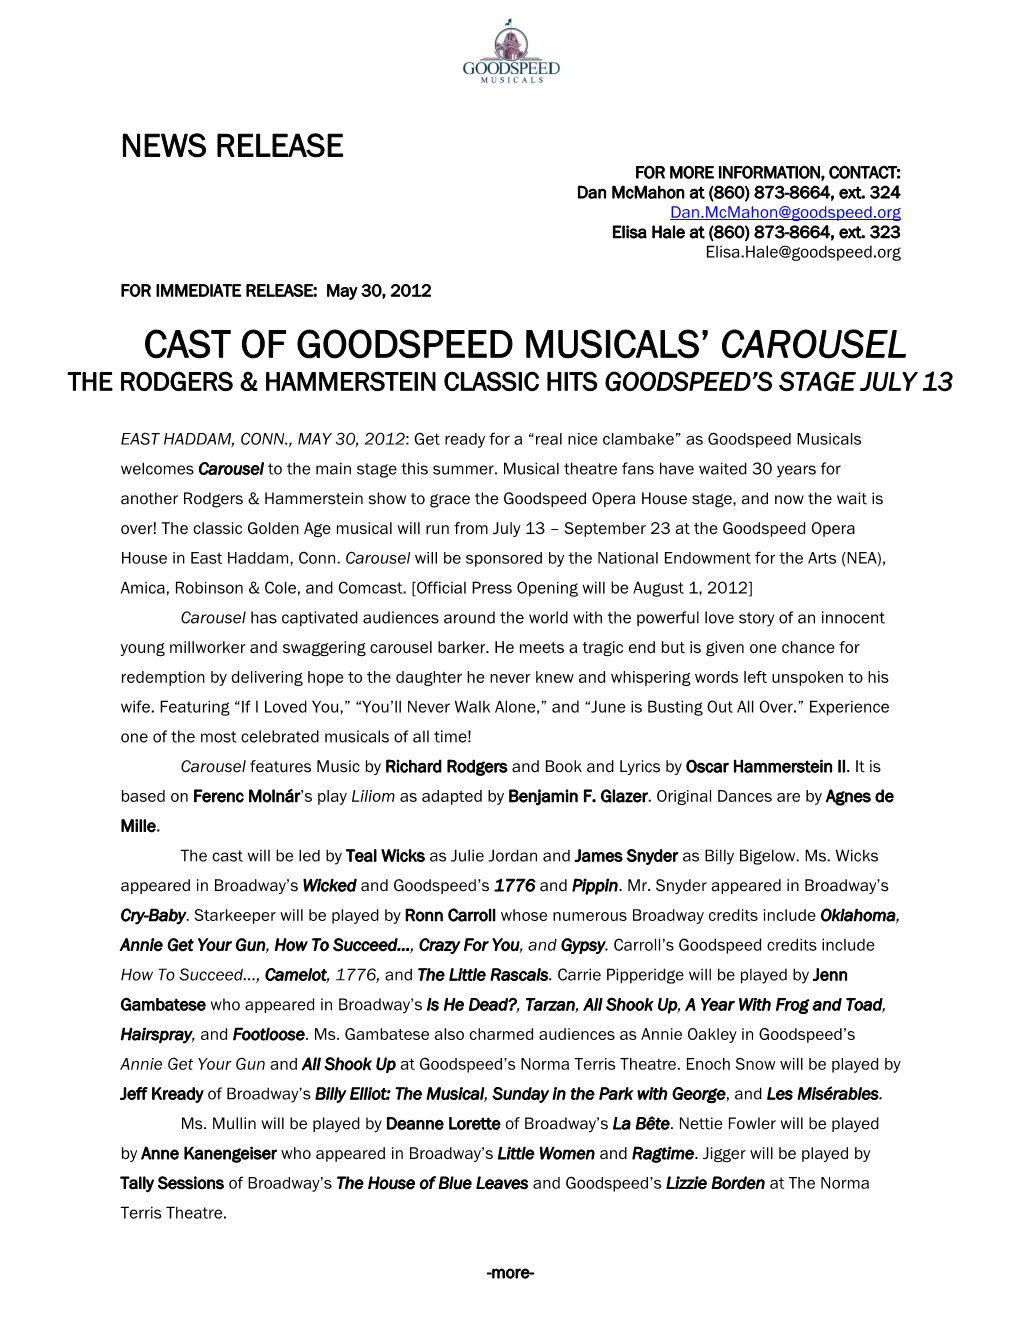 Cast of Goodspeed Musicals' Carousel